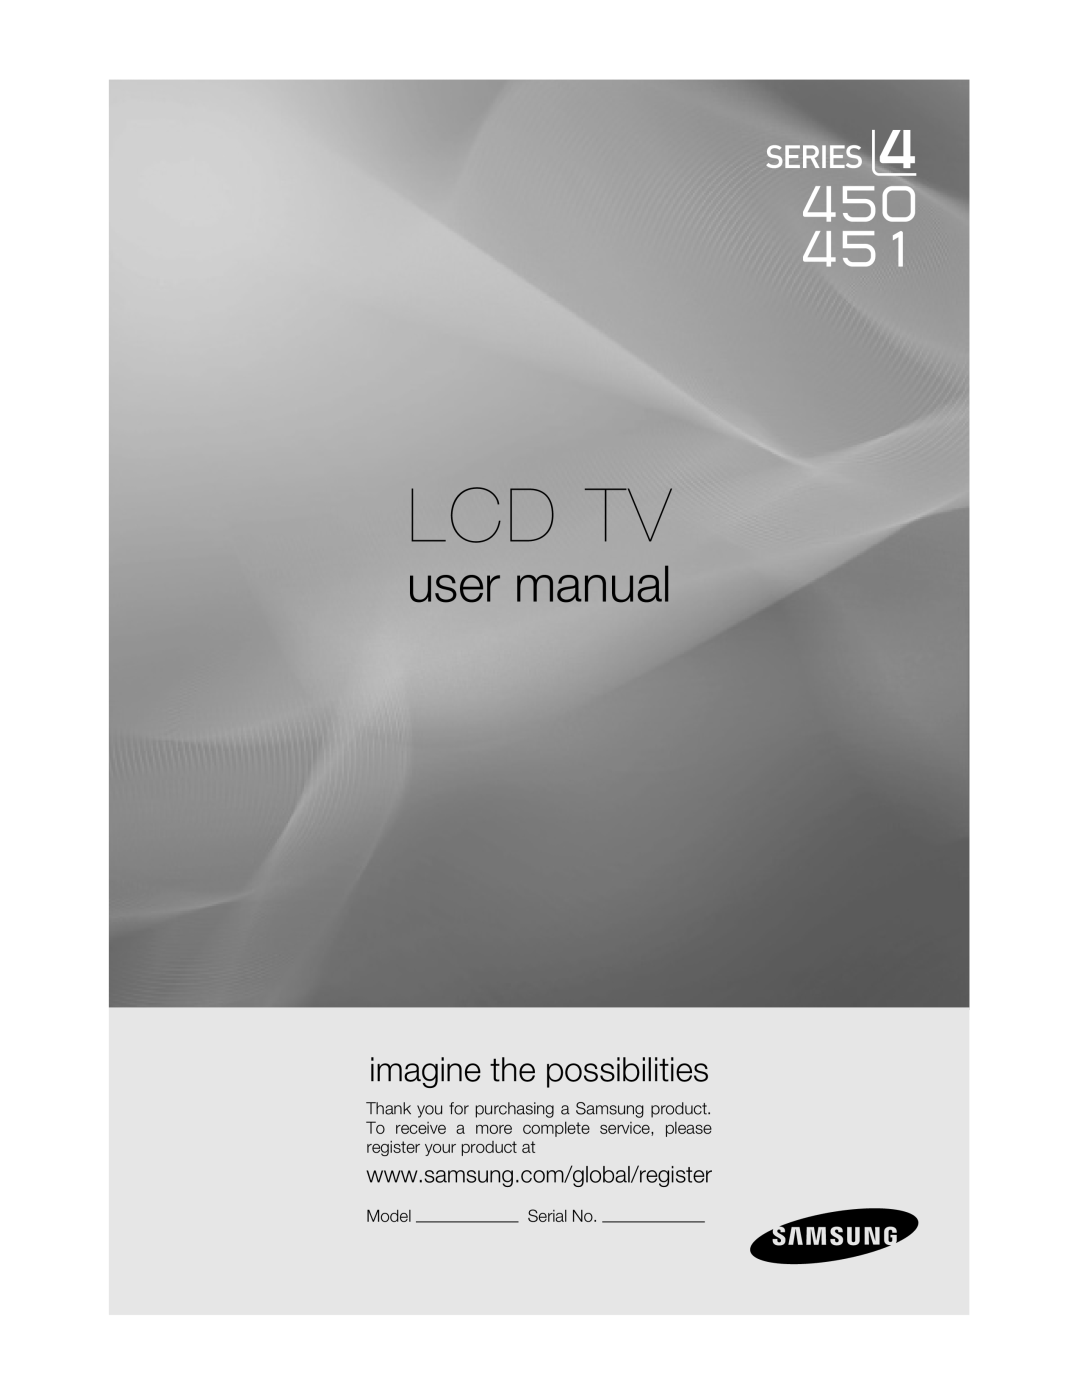 Samsung 451 user manual Lcd Tv, imagine the possibilities, Model 